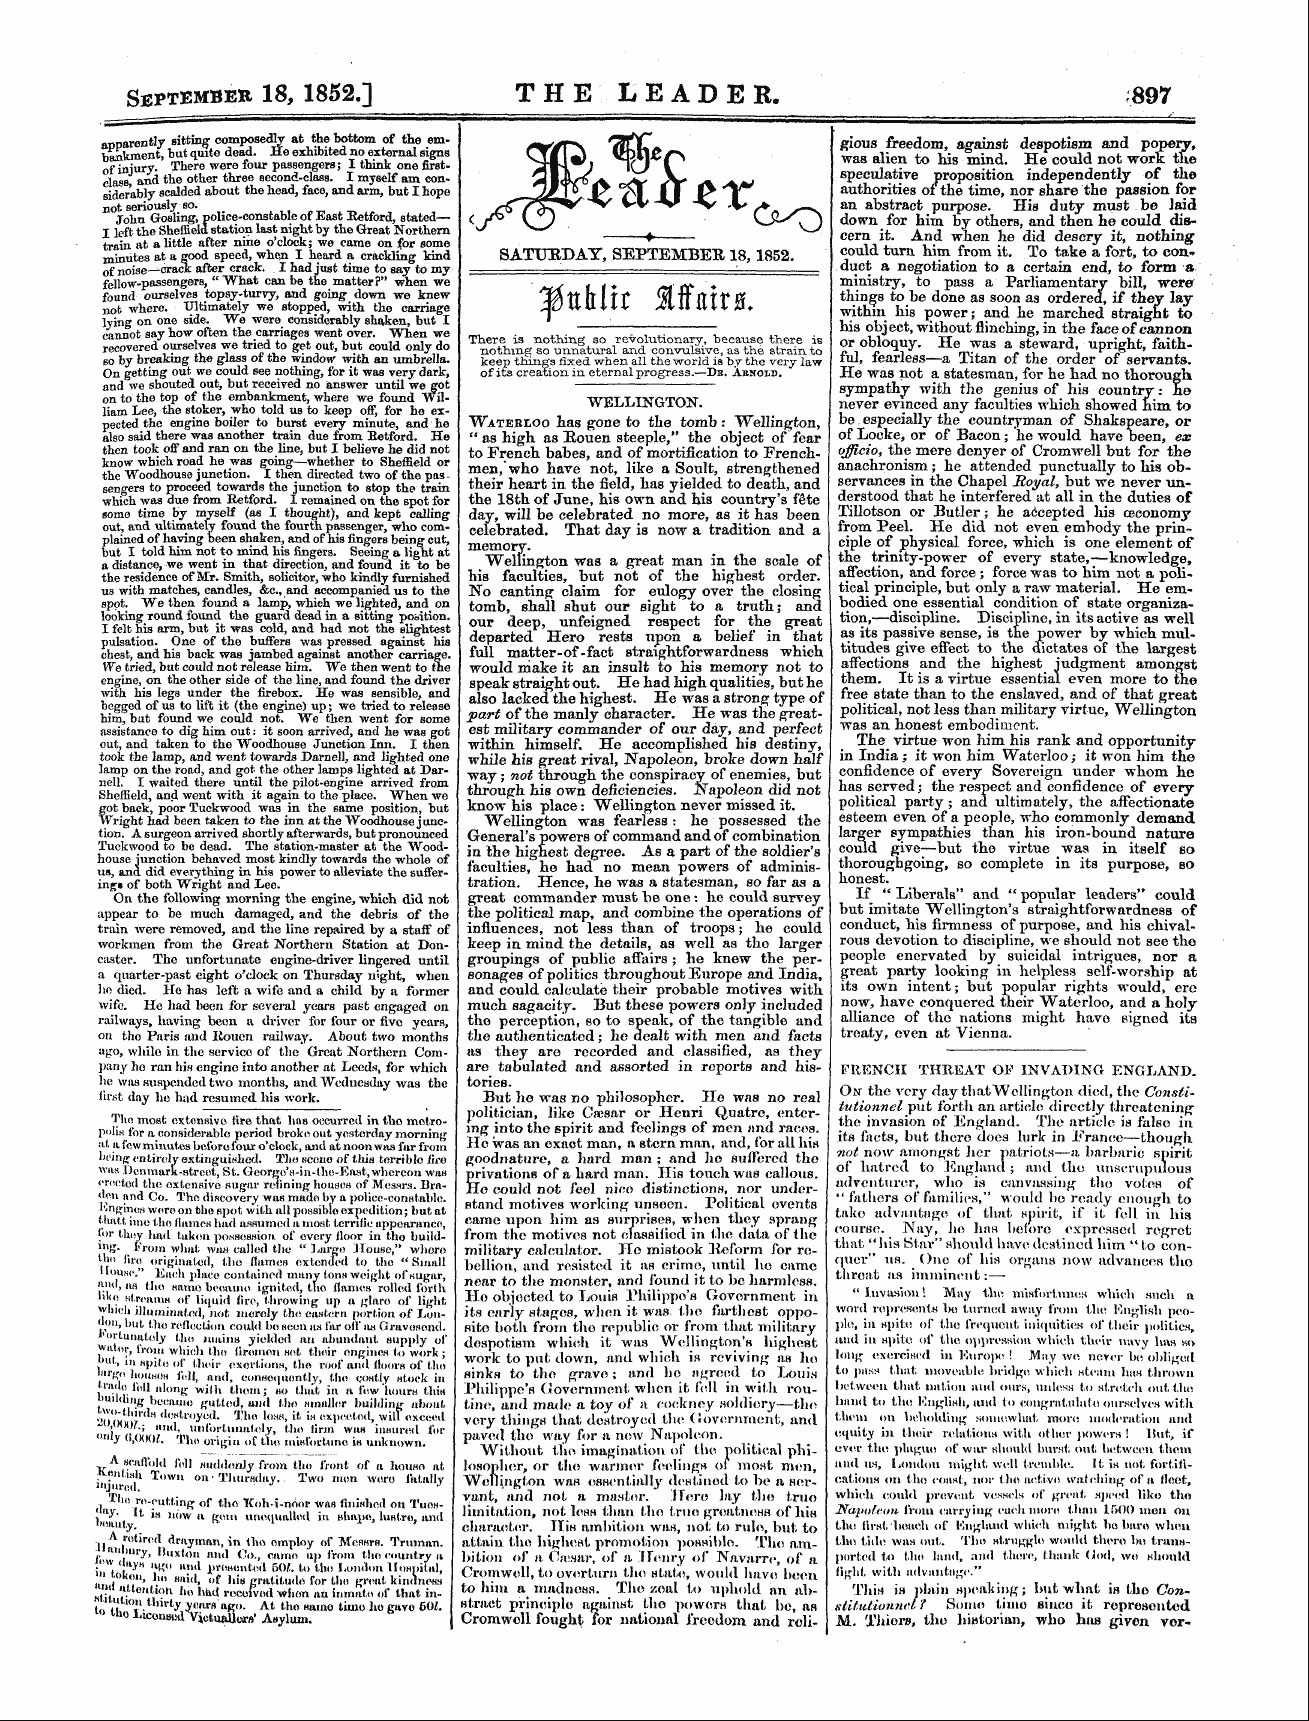 Leader (1850-1860): jS F Y, Country edition - ^Tt Hltr Mails.